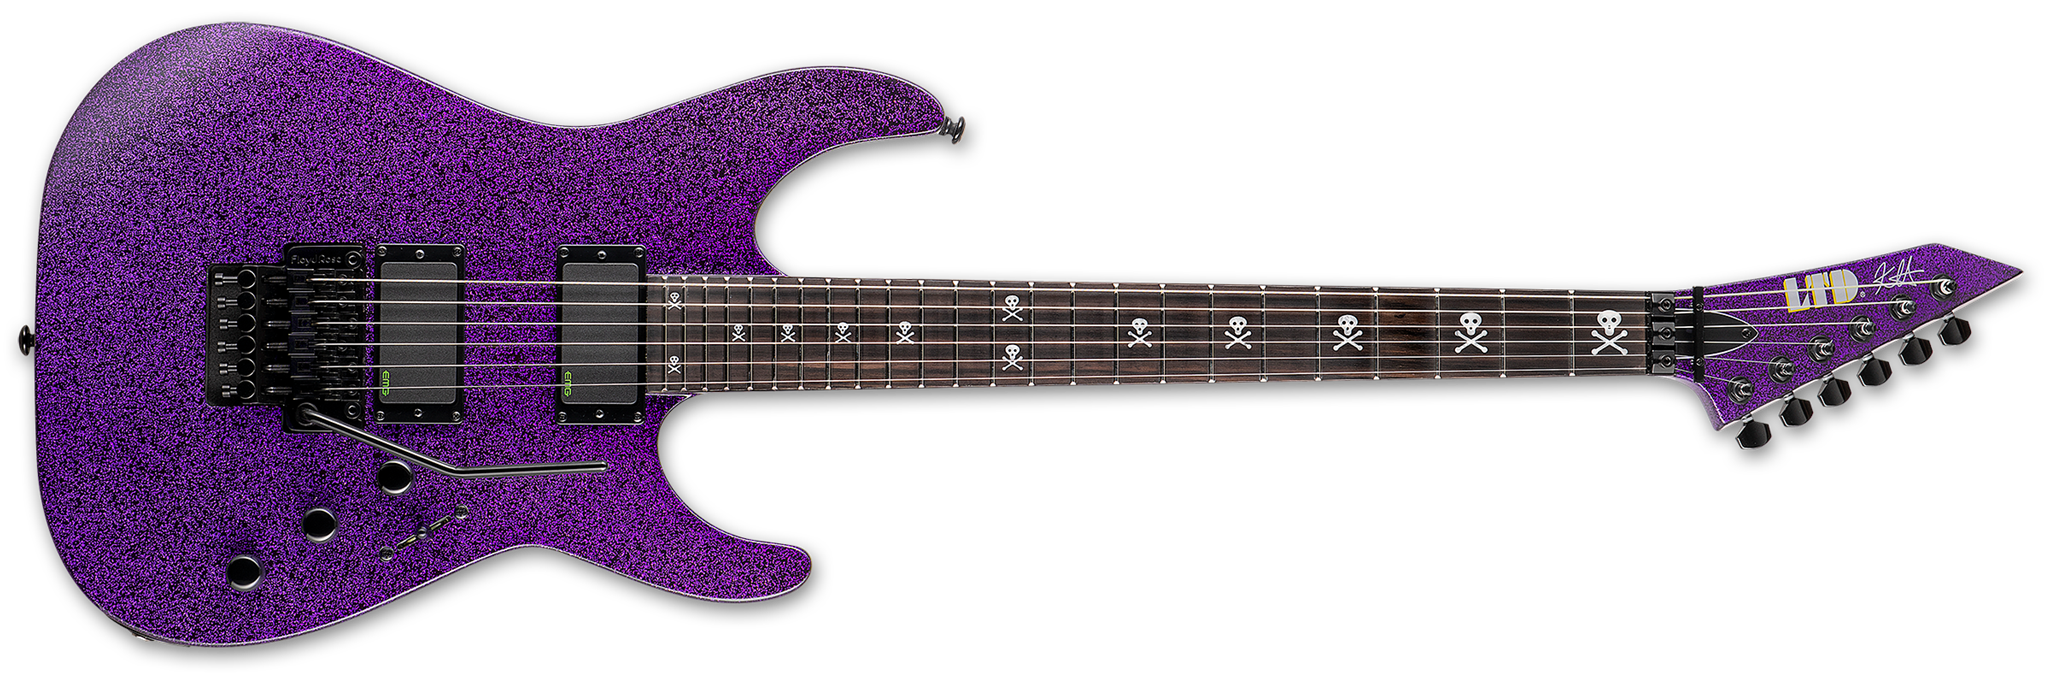 LTD SIGNATURE SERIES KH-602 Purple Sparkle  6-String Electric Guitar  